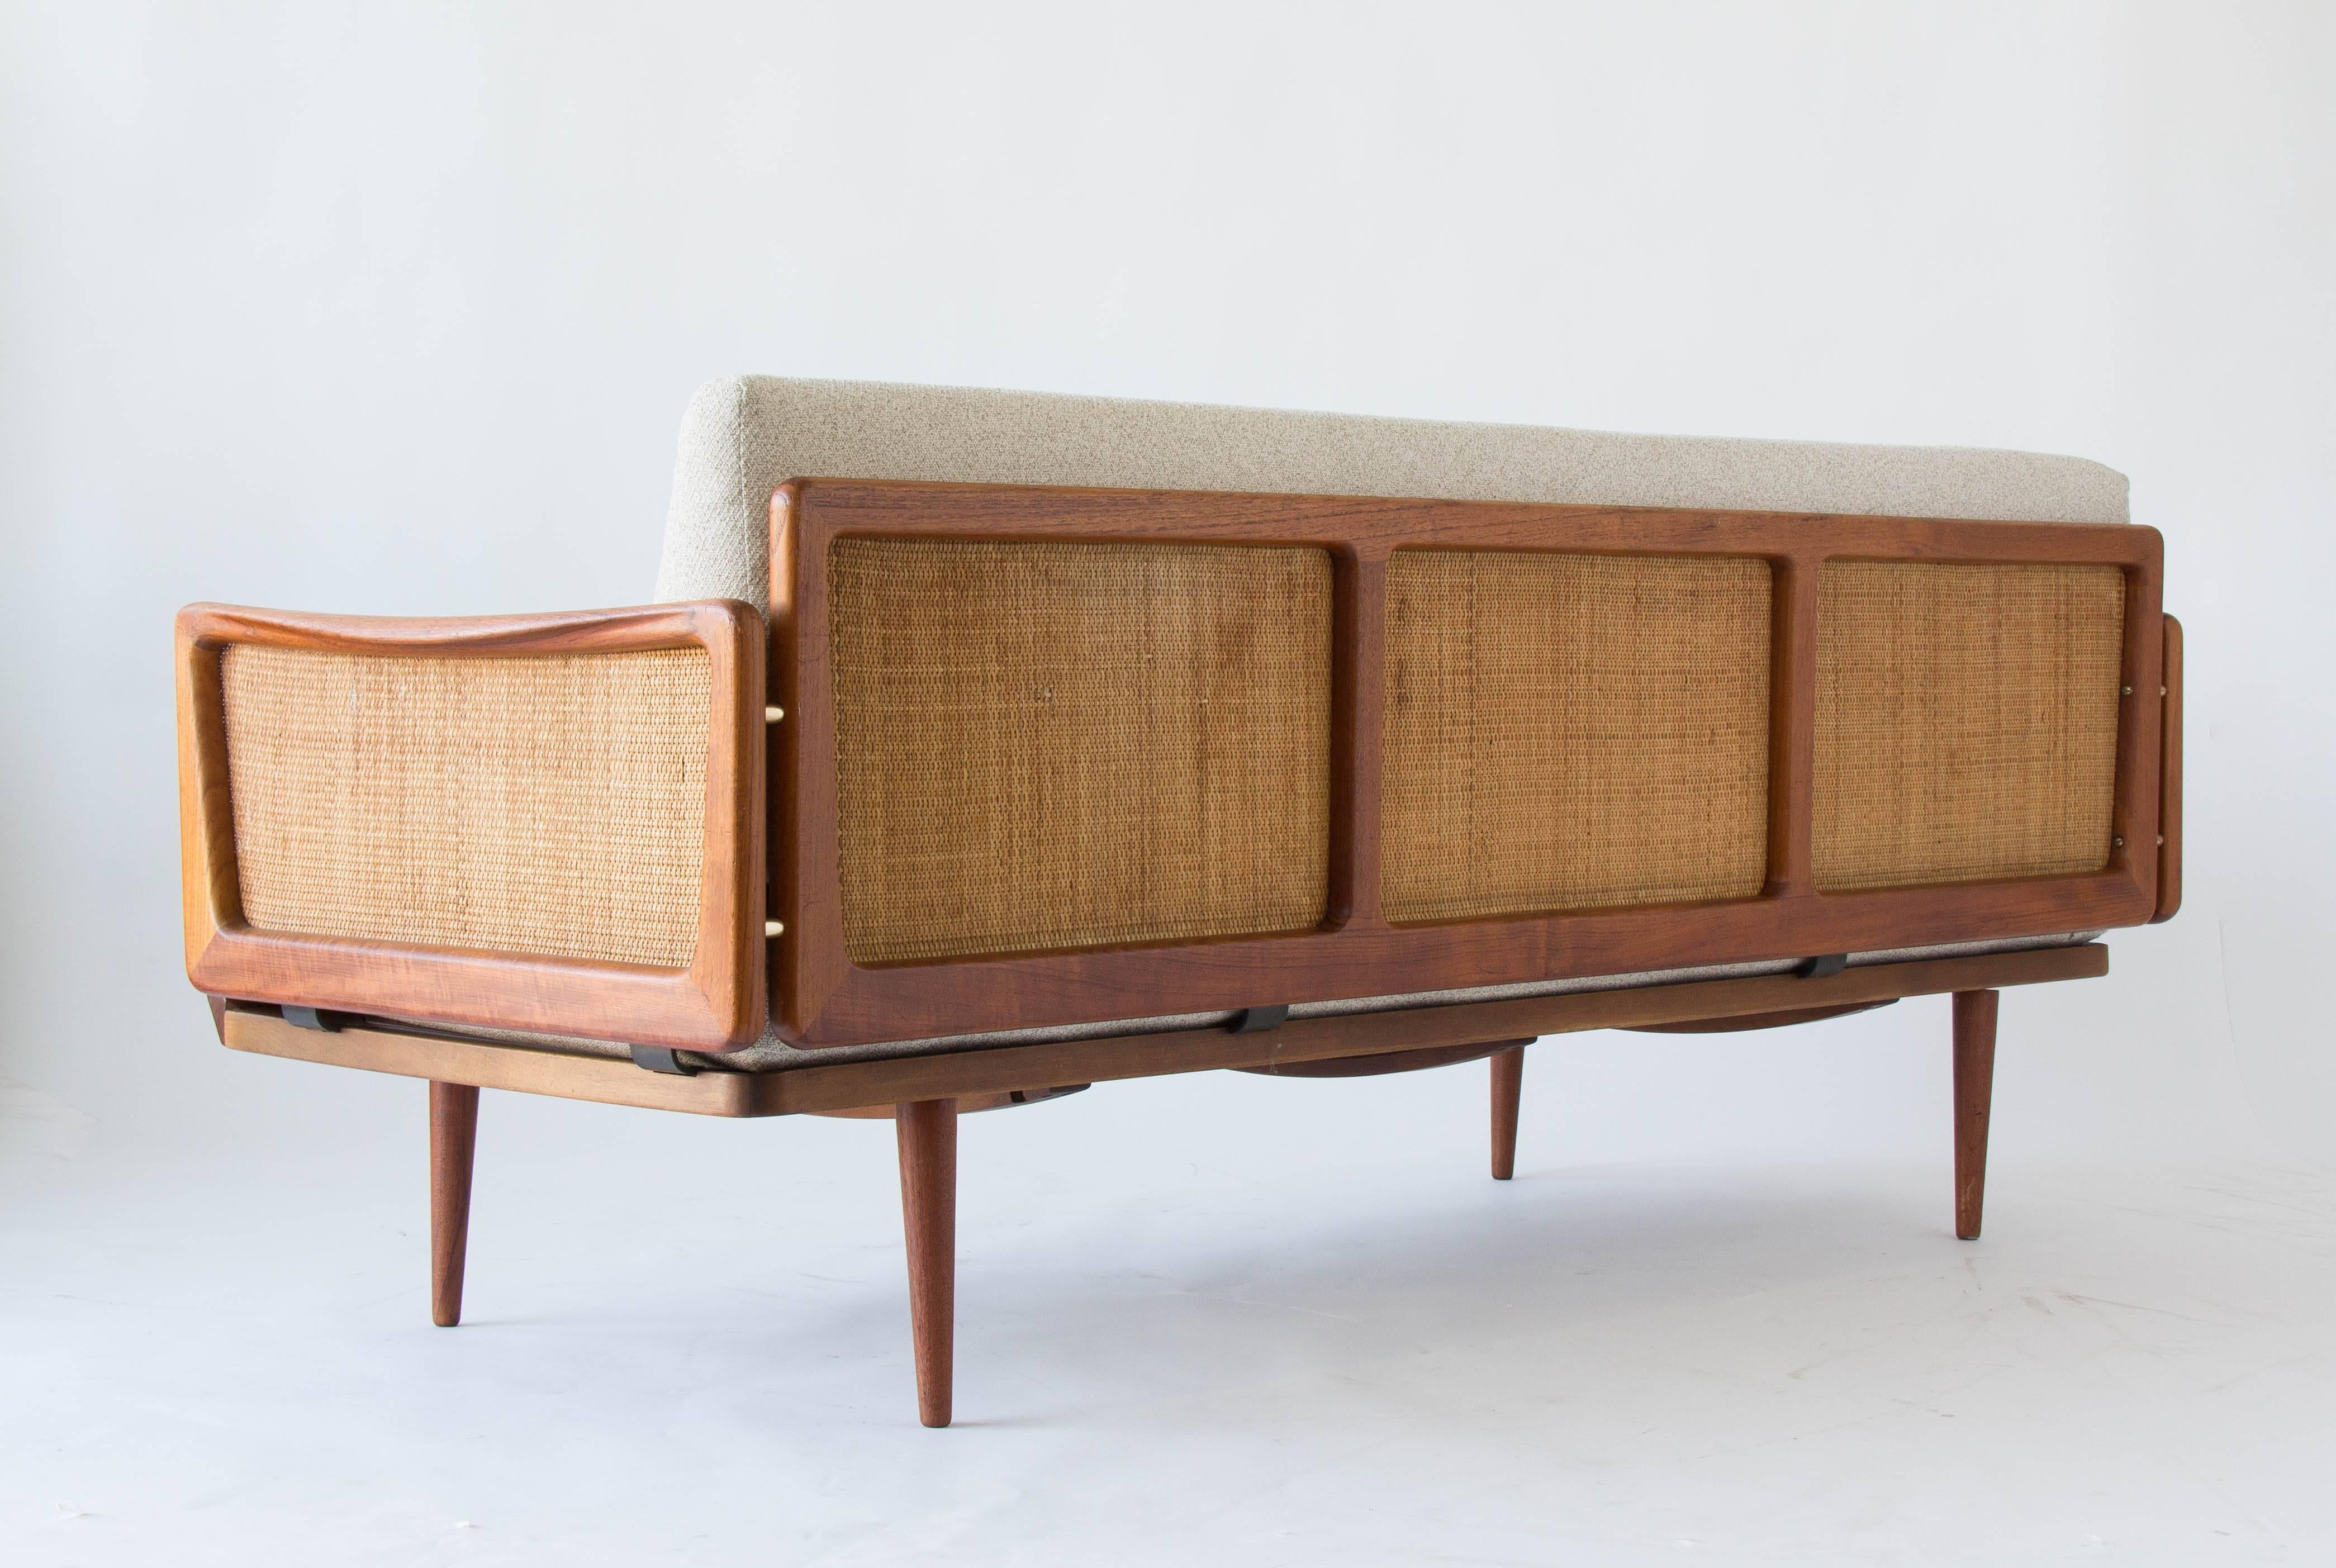 Scandinavian Modern Sofa with Cane Details by Peter Hvidt and Orla Mølgaard-Nielsen for John Stuart